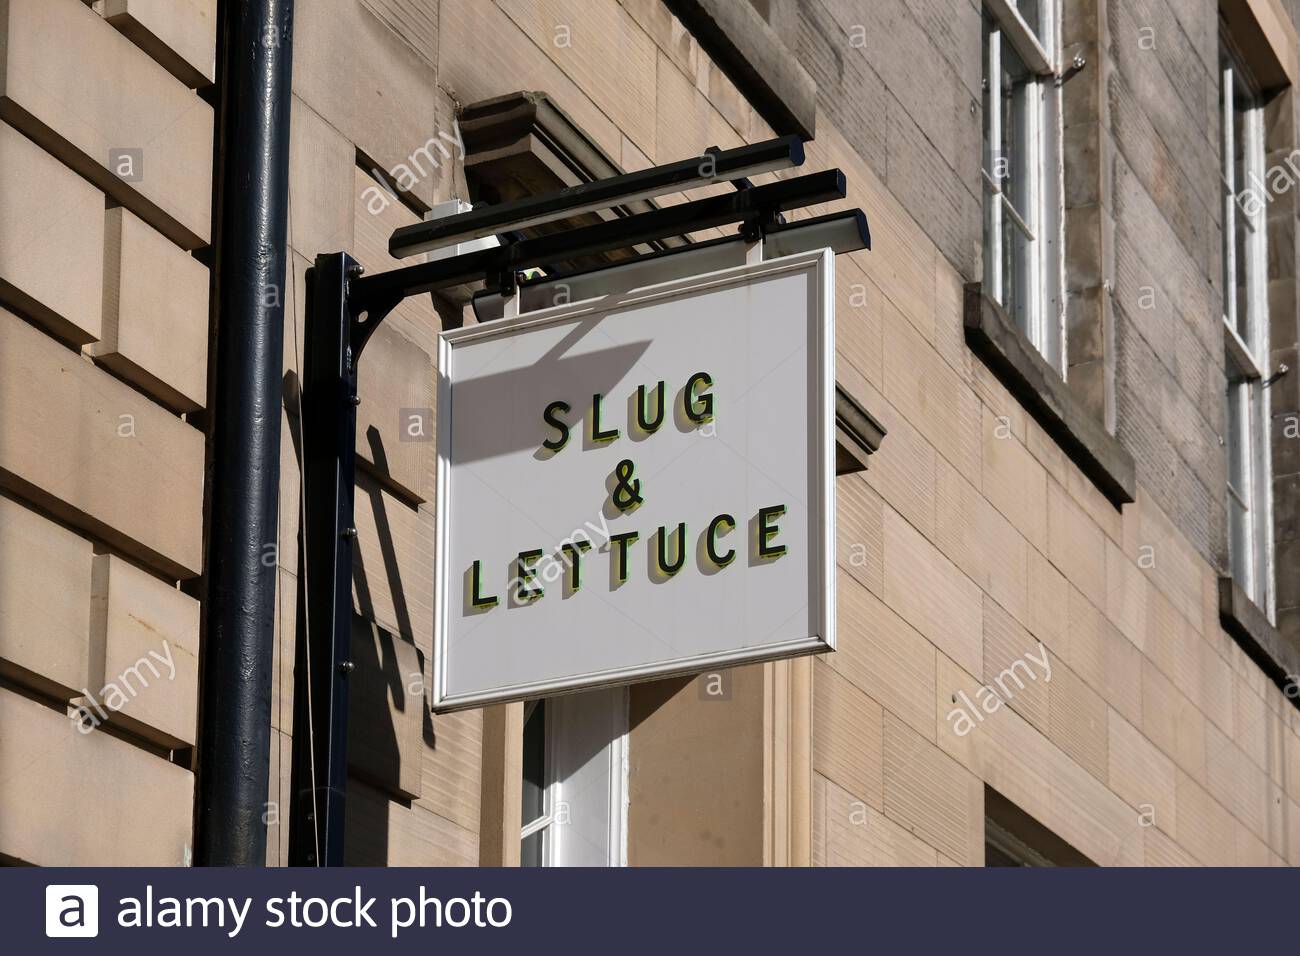 Slug & Lettuce bar sign, George Street, Edinburgh, Scotland Stock Photo